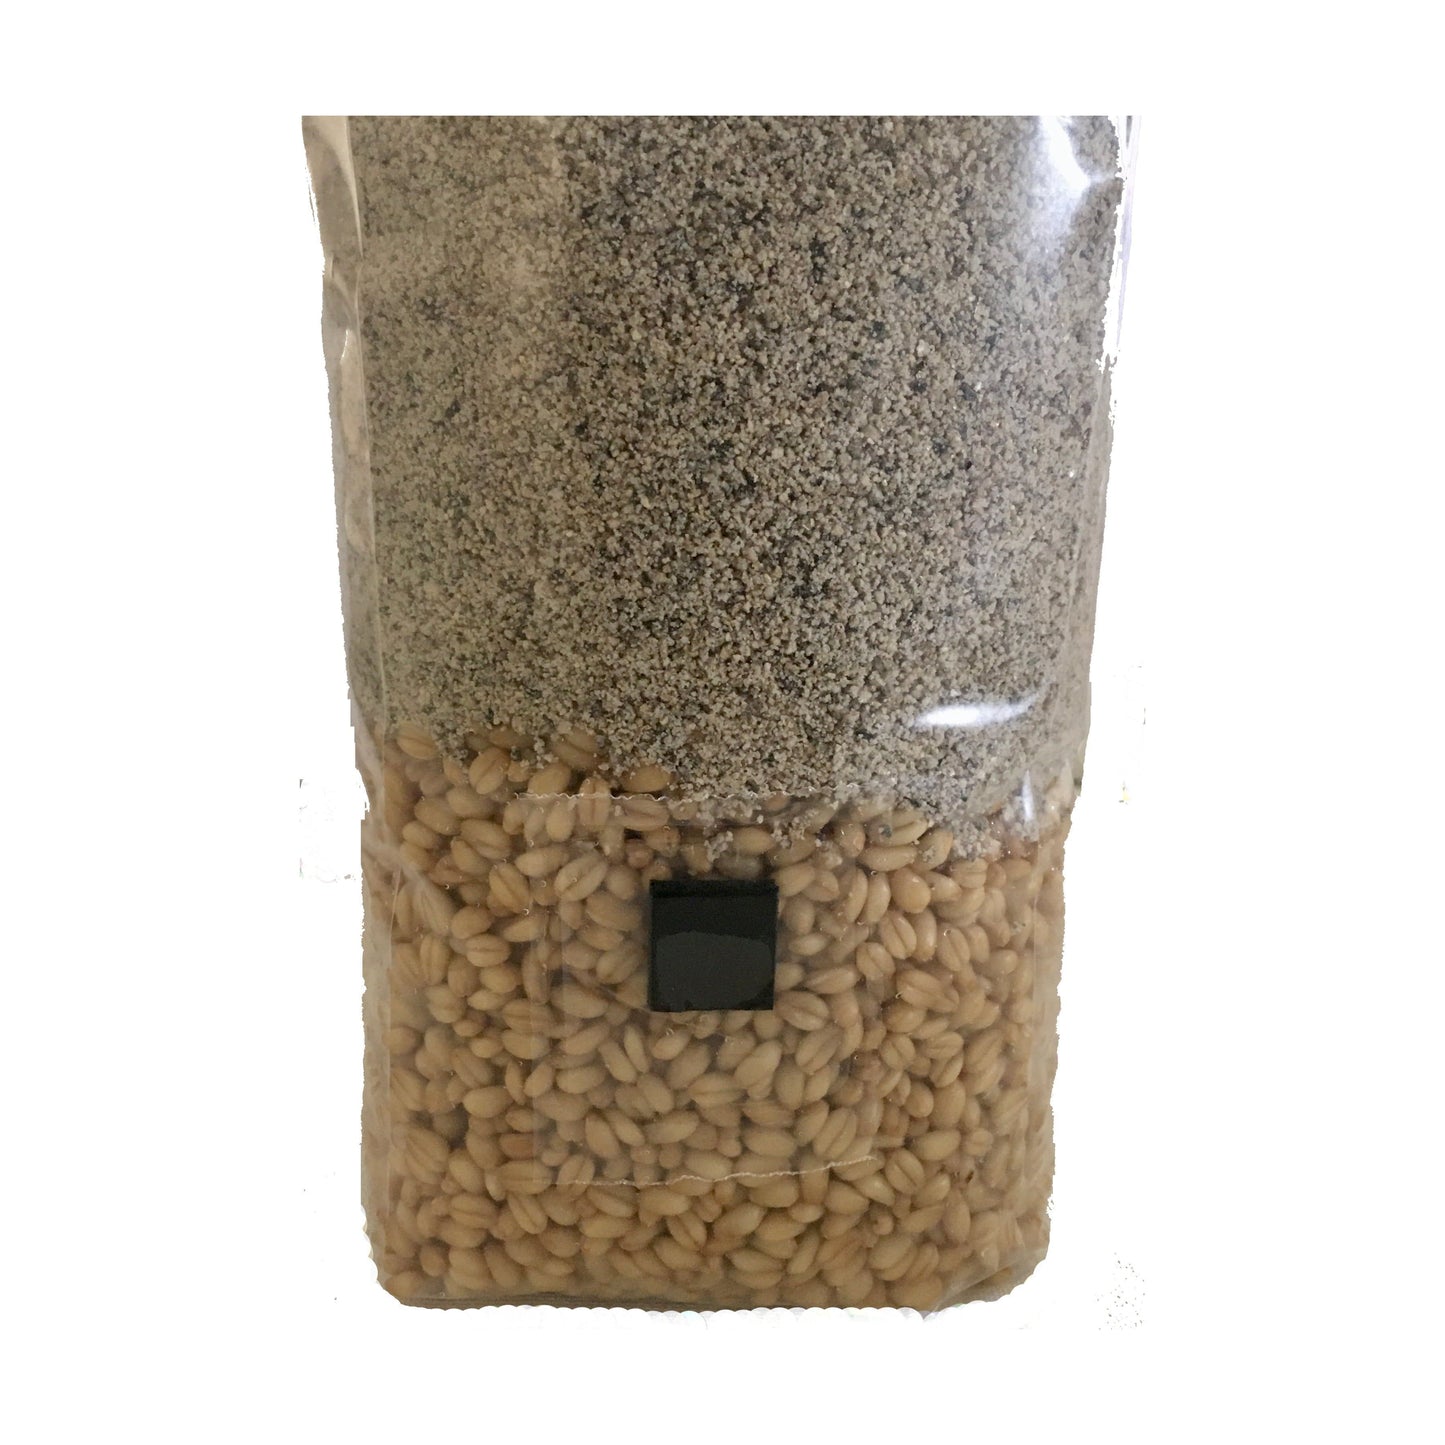 Brown Rice Flour & Wheat Berry All-In-One Mushroom Grow Bag Closeup